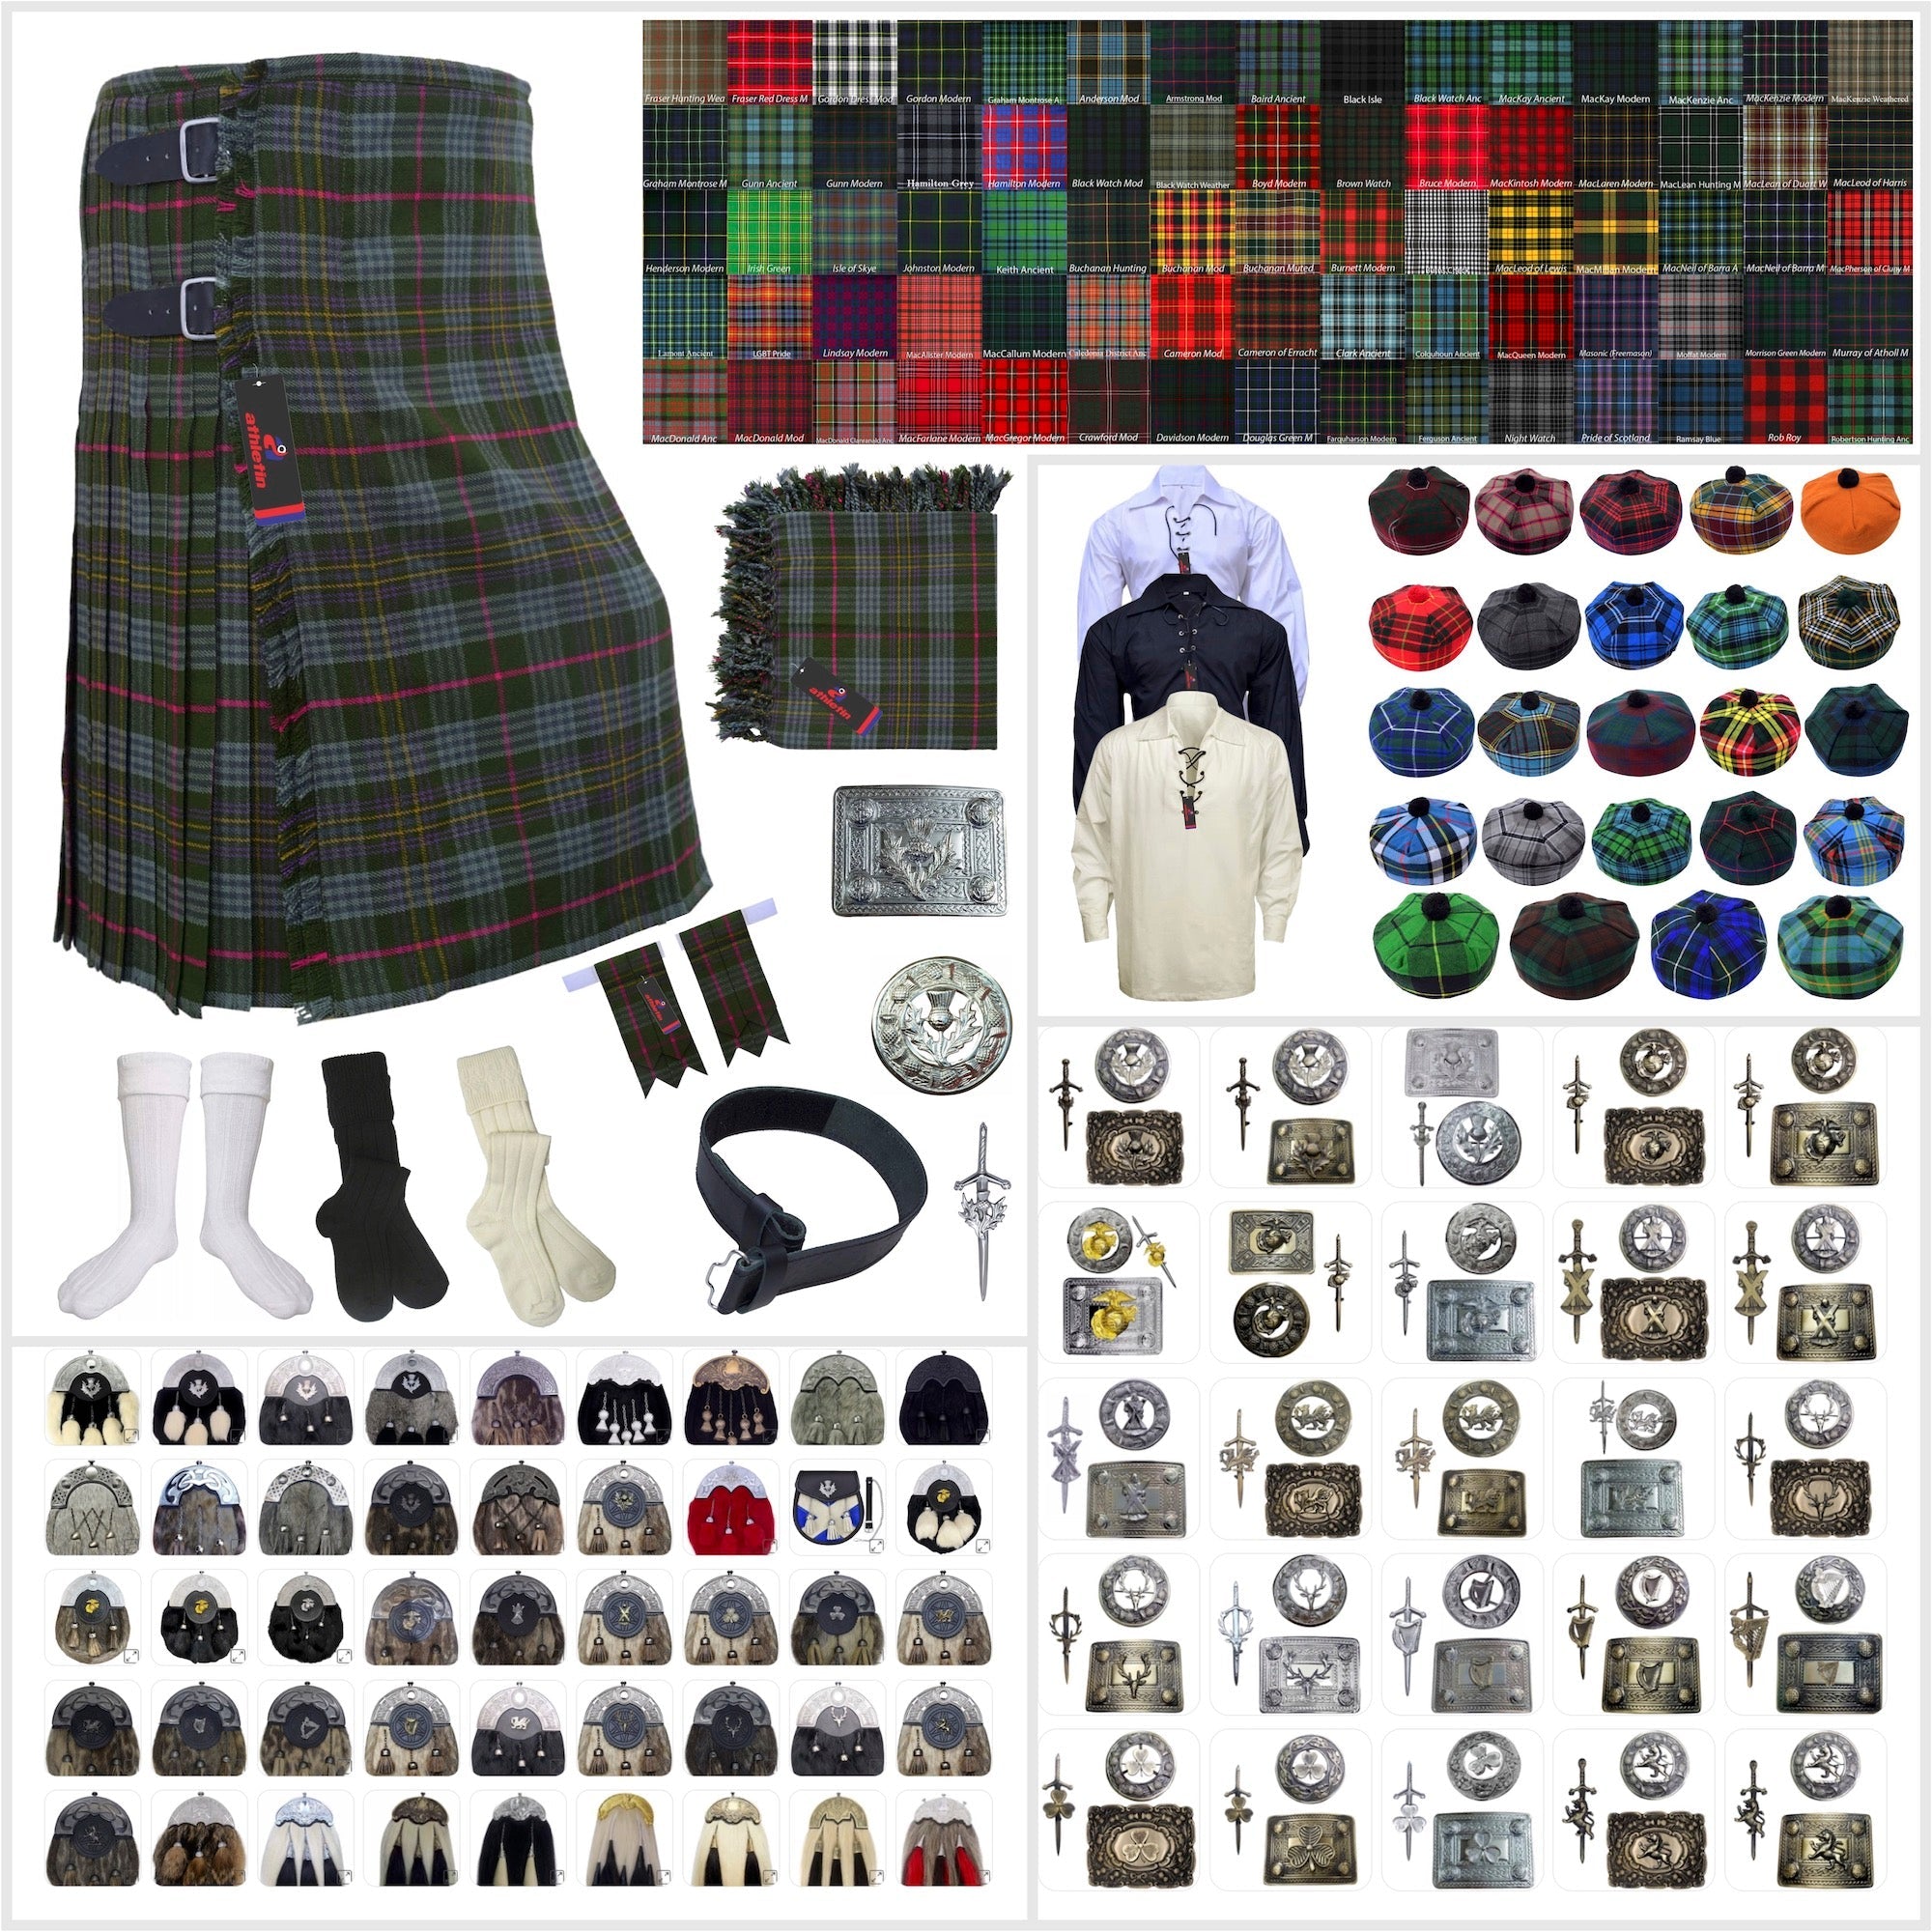 Kennedy Tartan Kilt Outfit - Authentic Scottish Clan Attire